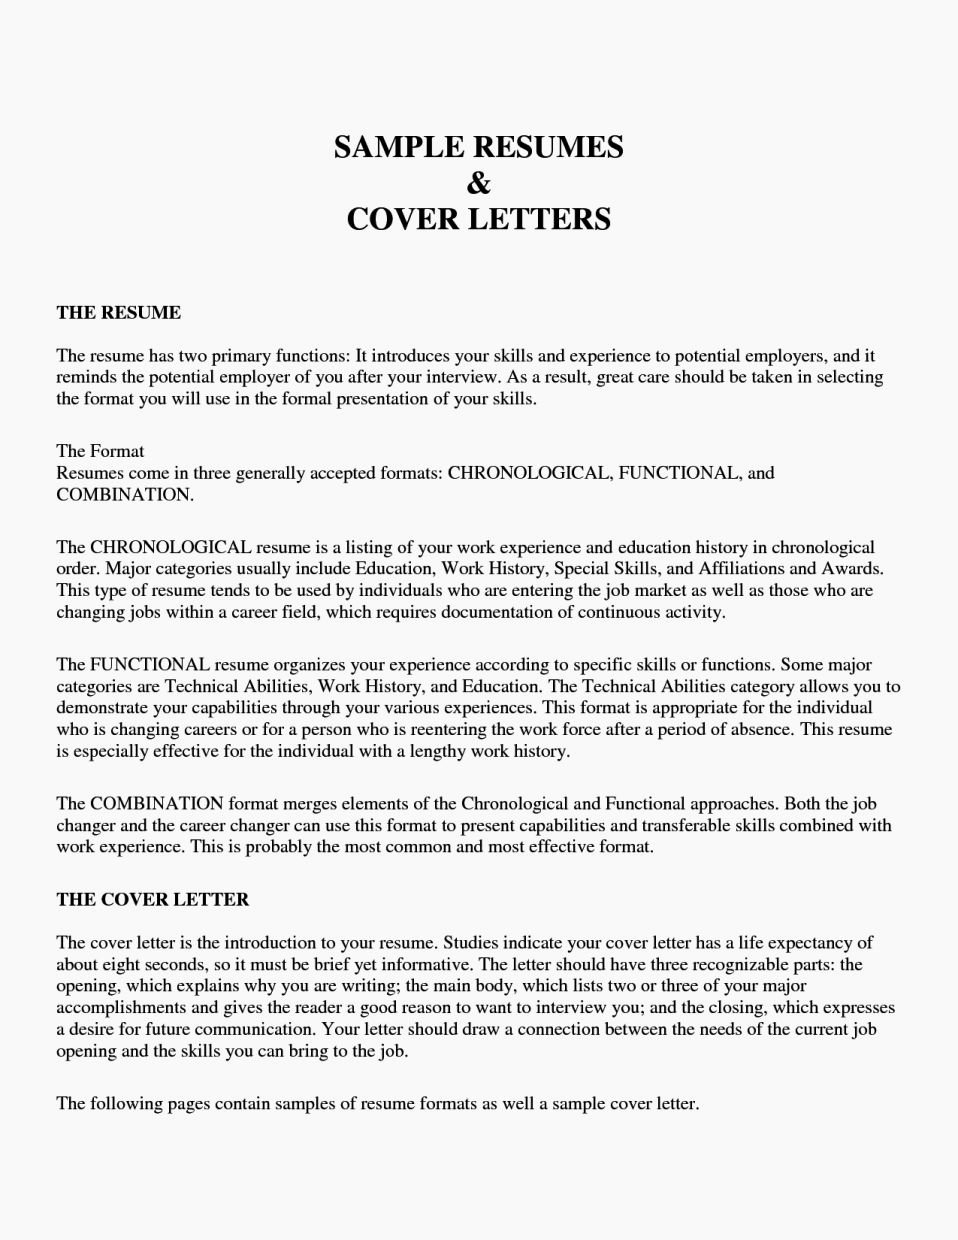 Cover Letter for Reentering Workforce